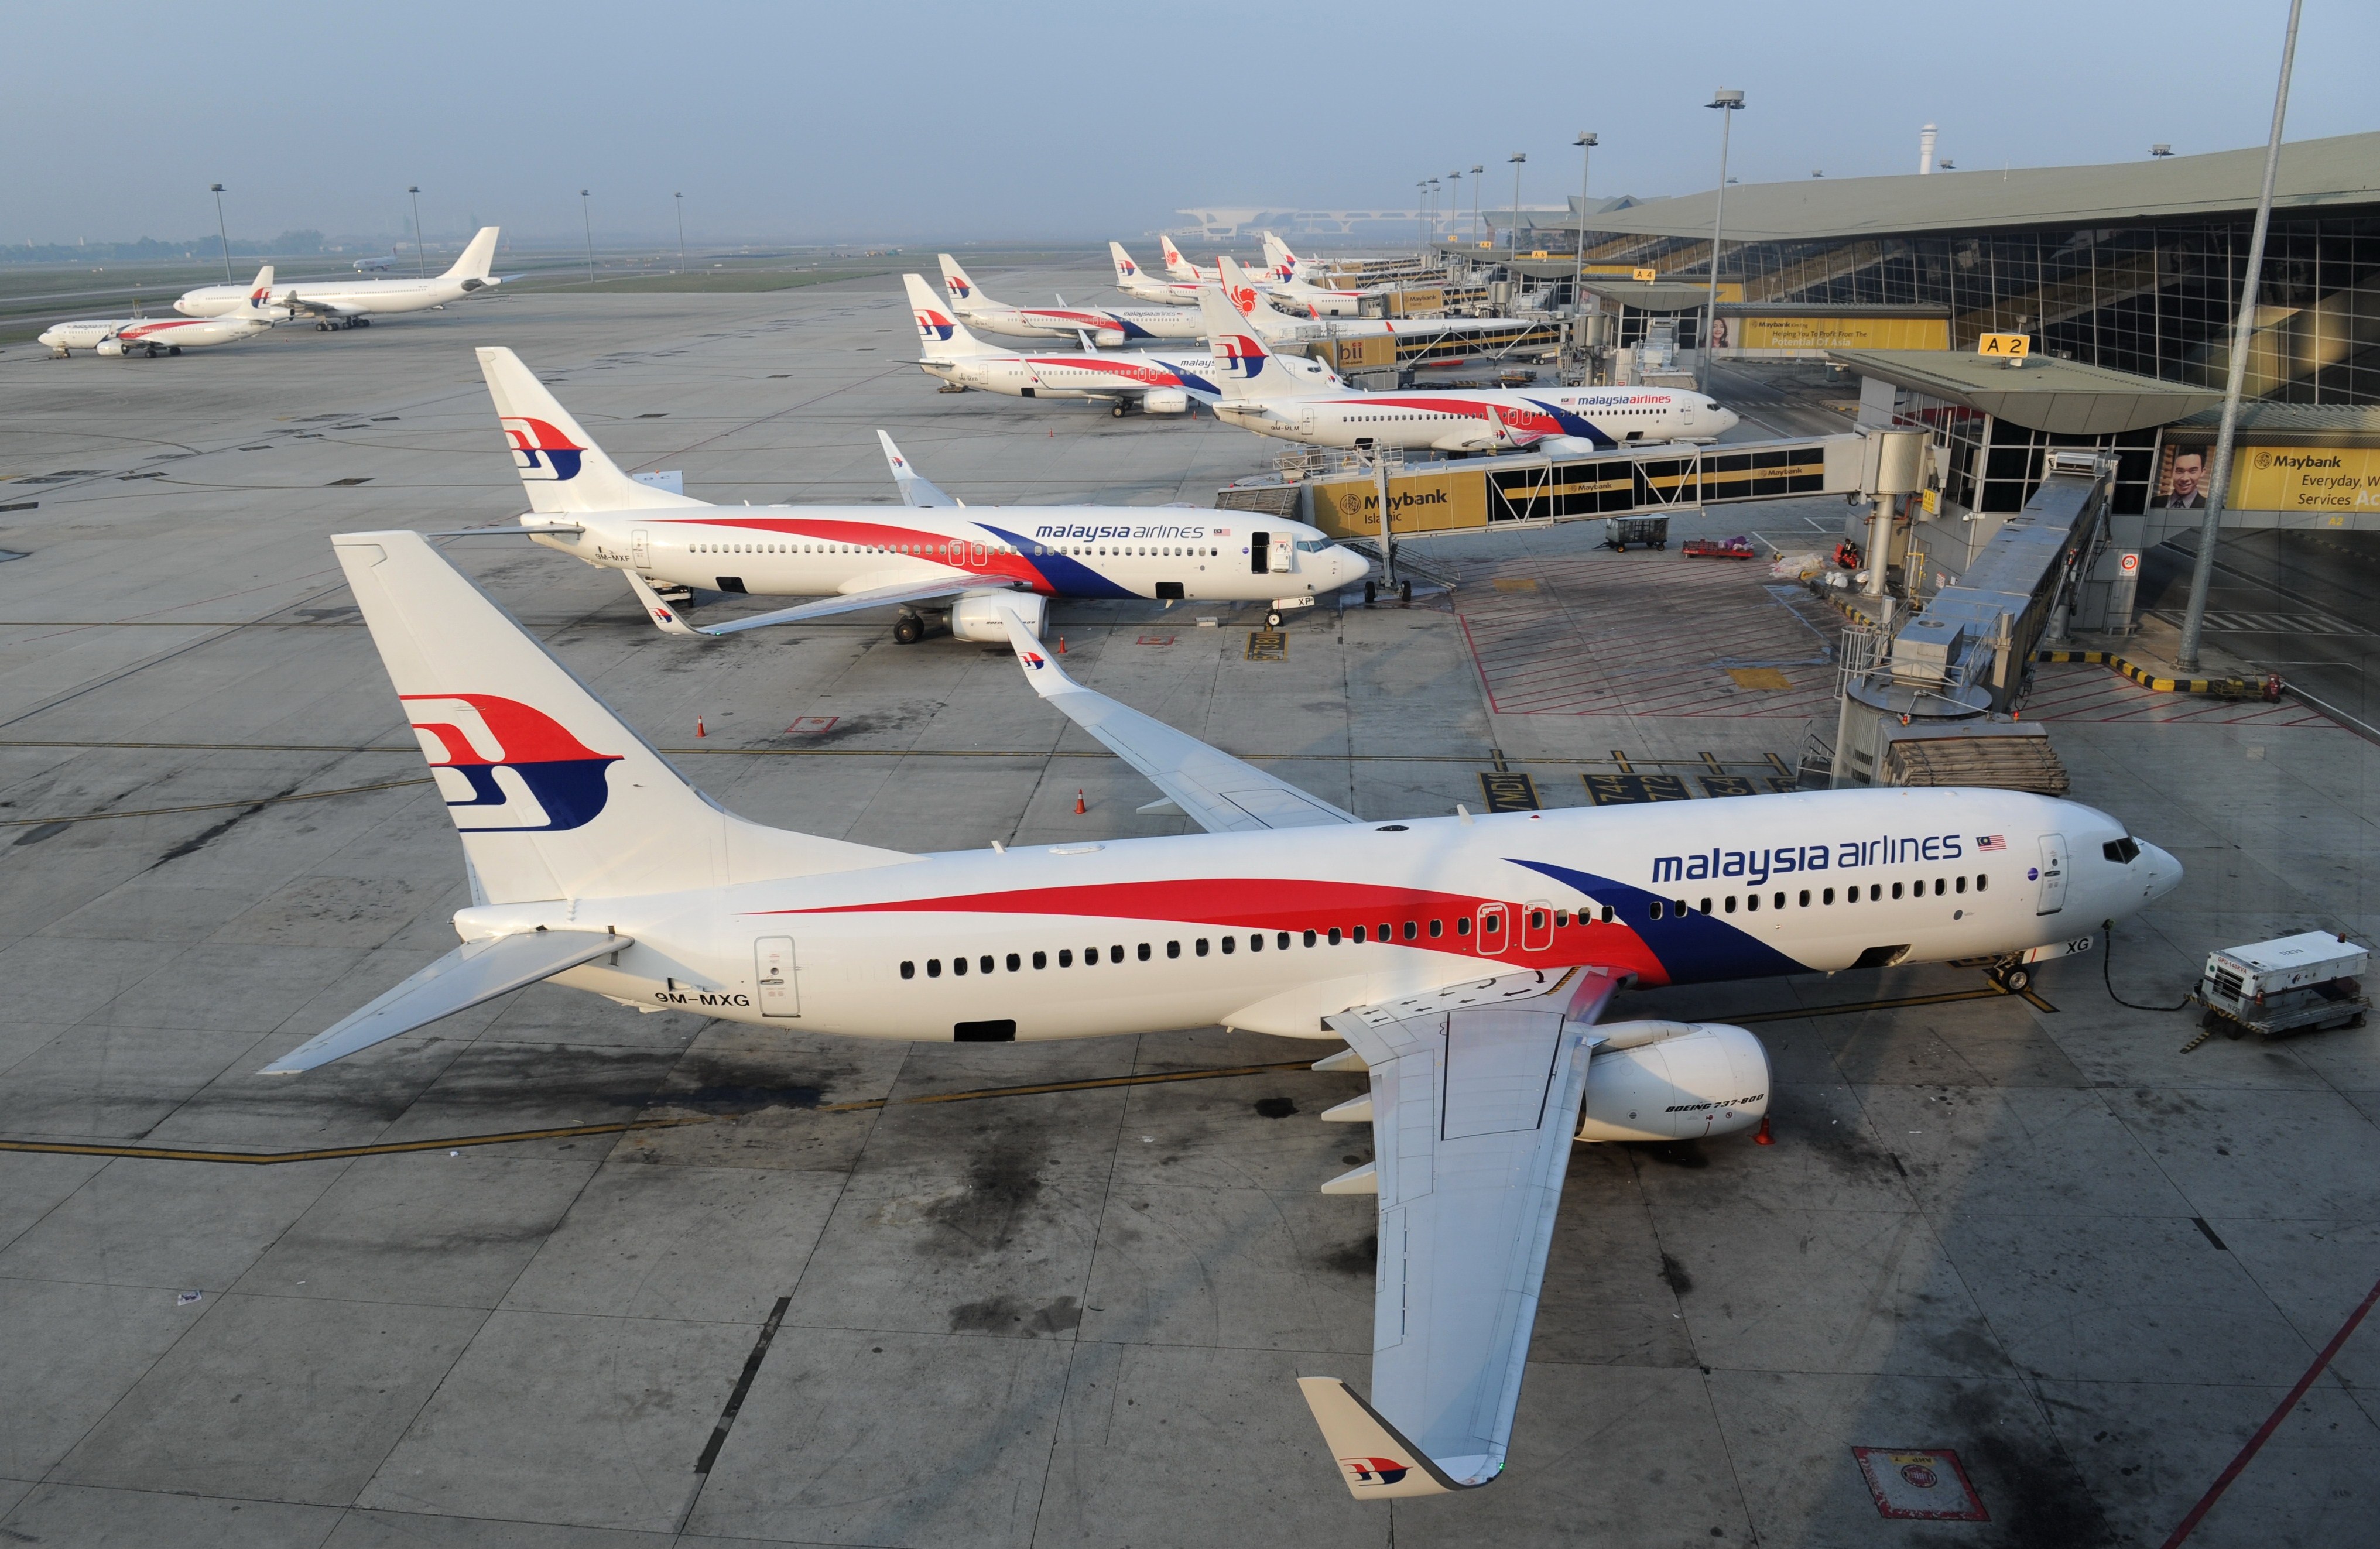 Рейс малайзия 370. Рейс mh370. 370 Малайзия Эйрлайнс. Рейс 370 Malaysia Airlines. Самолета рейса mh370 авиакомпании Malaysia Airlines.